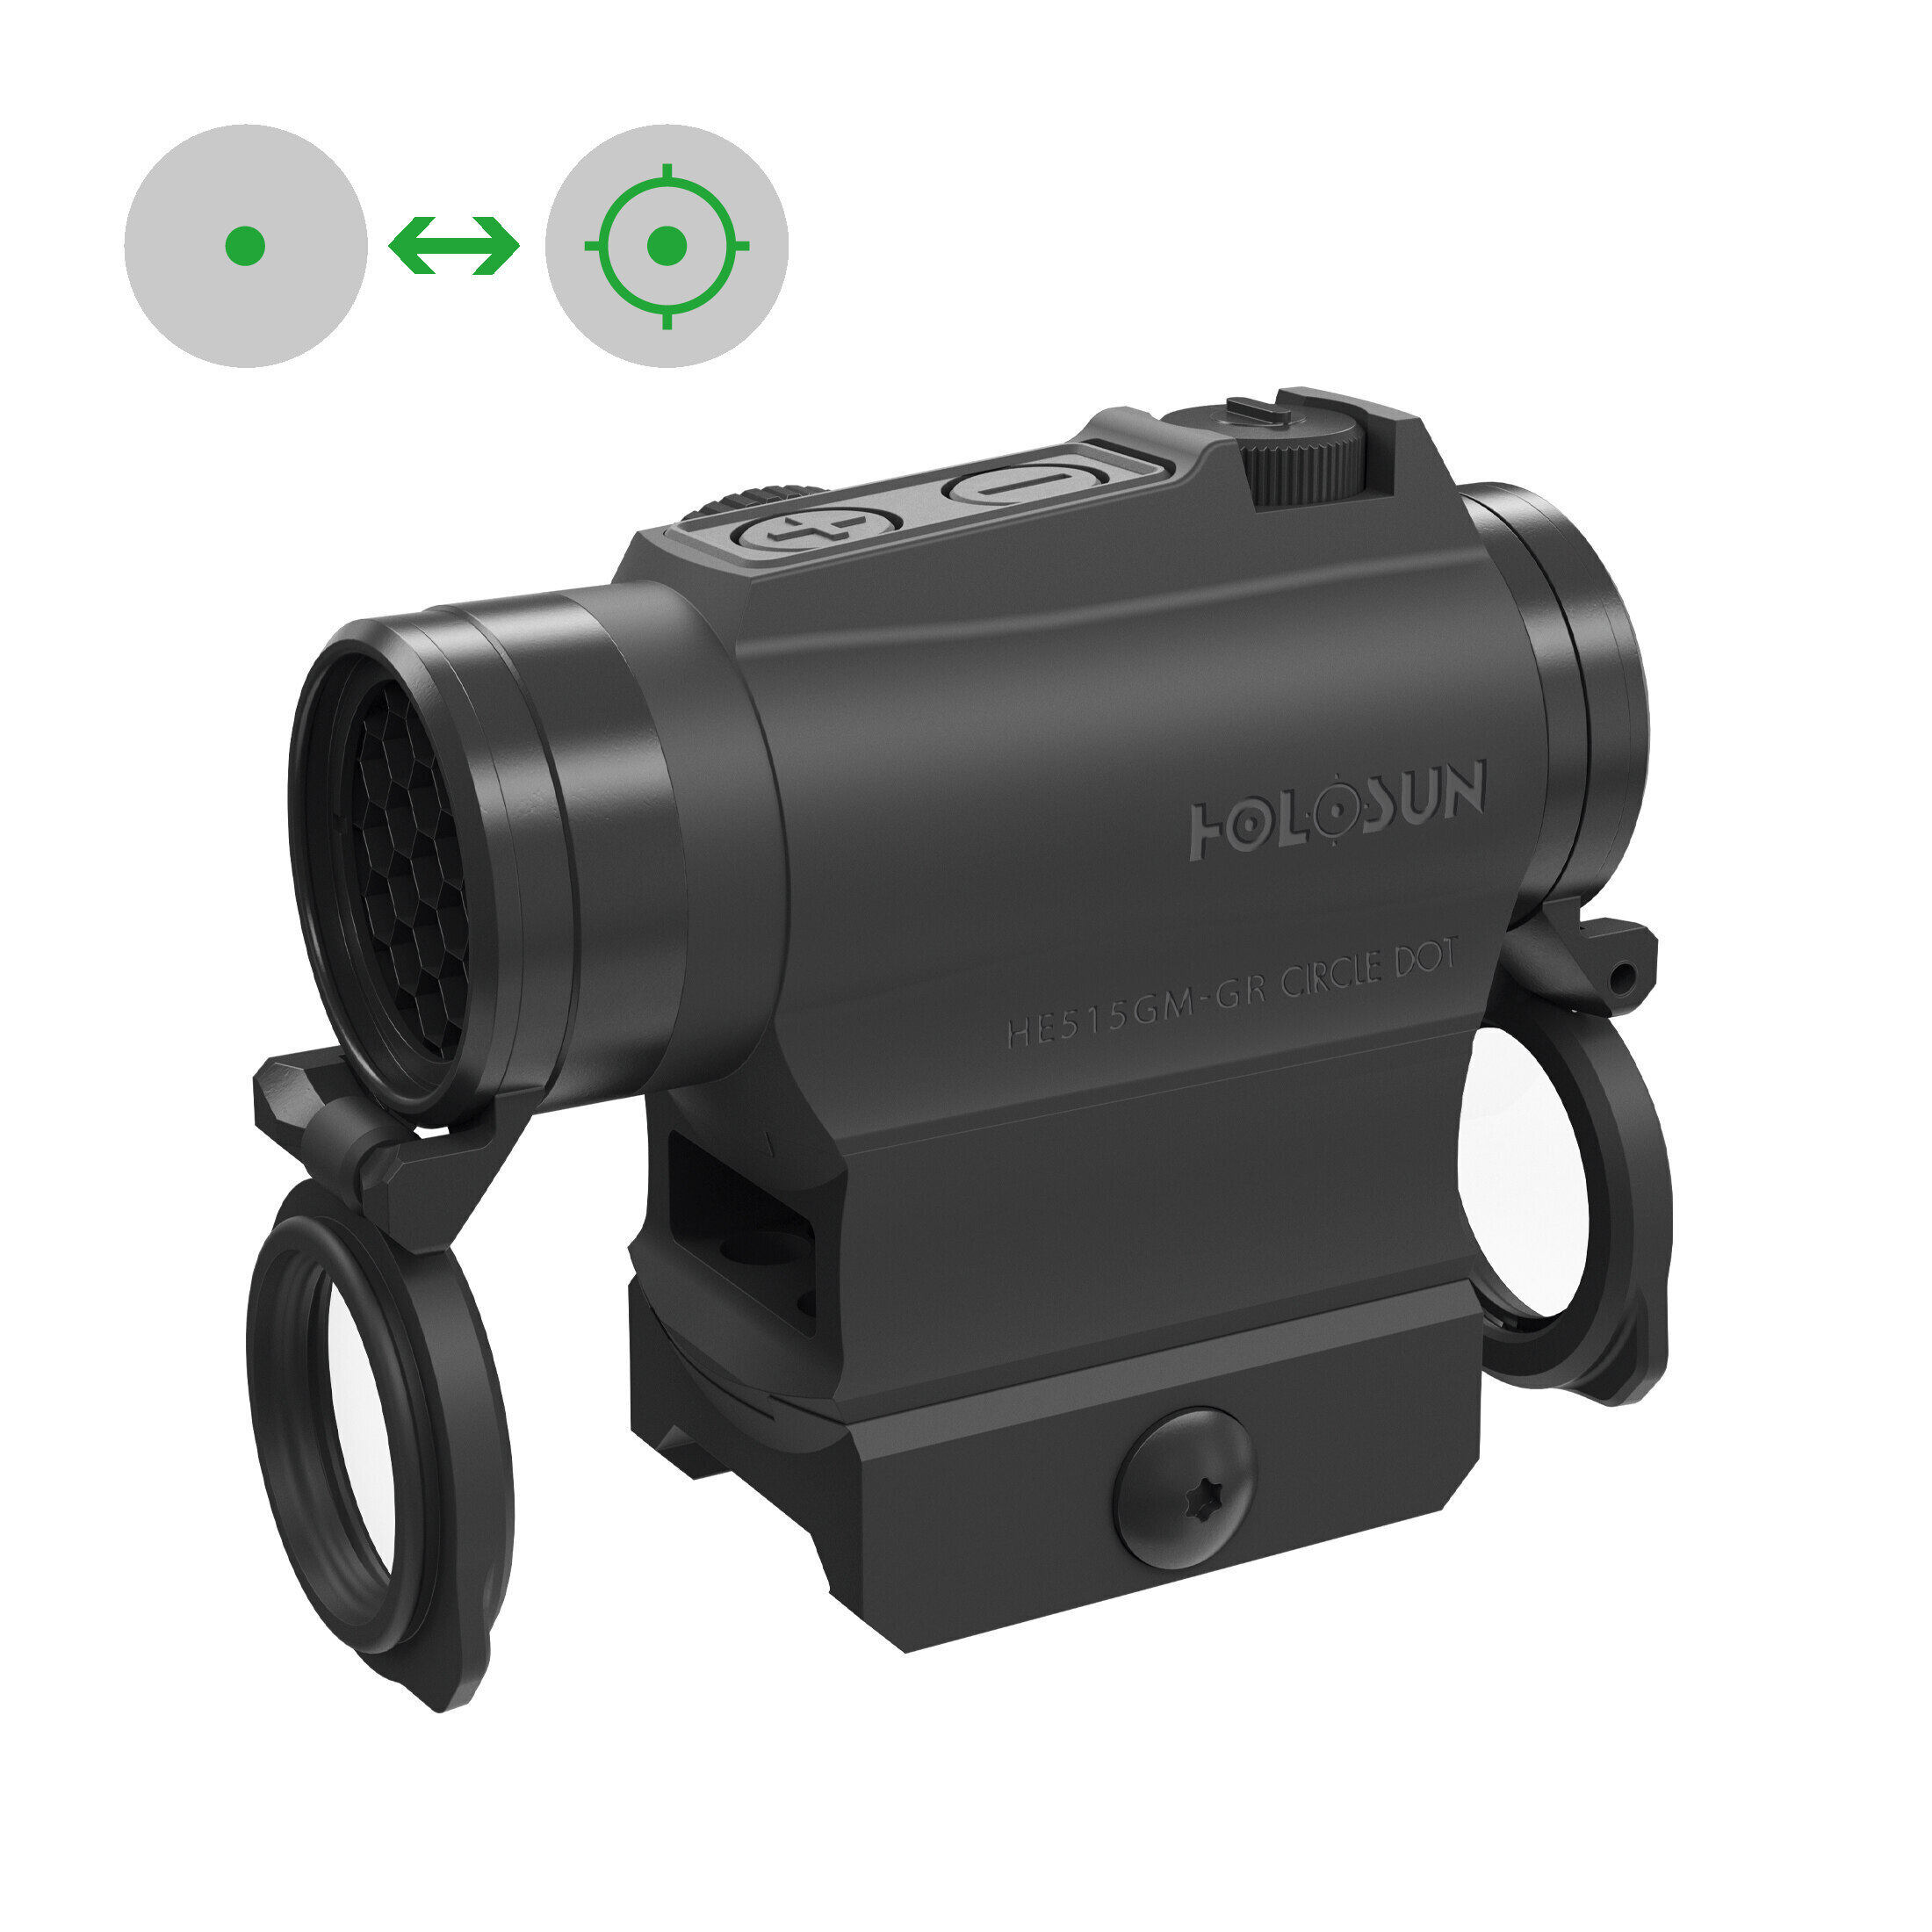 Holosun ELITE HE515G-M-GR Micro-viseur Point vert Viseur Reflex Cercle avec point, Viseur Reflex, R…